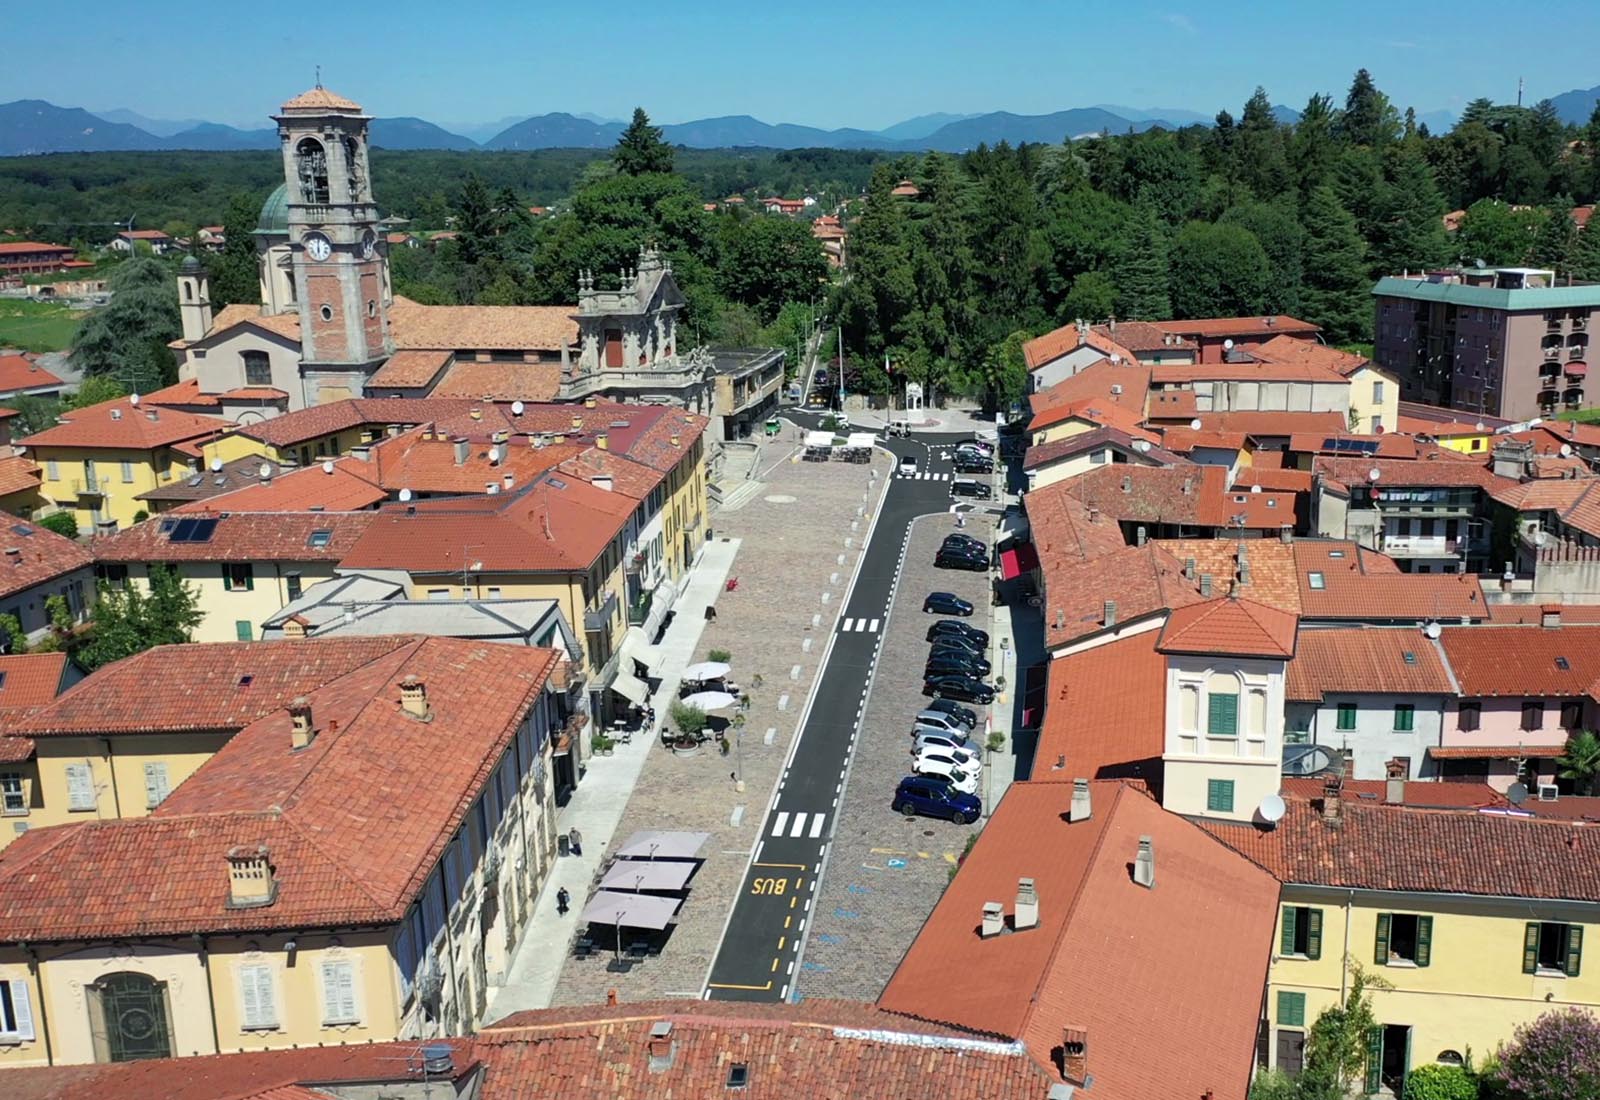 Piazza Libertà in Appiano Gentile - Aerial view